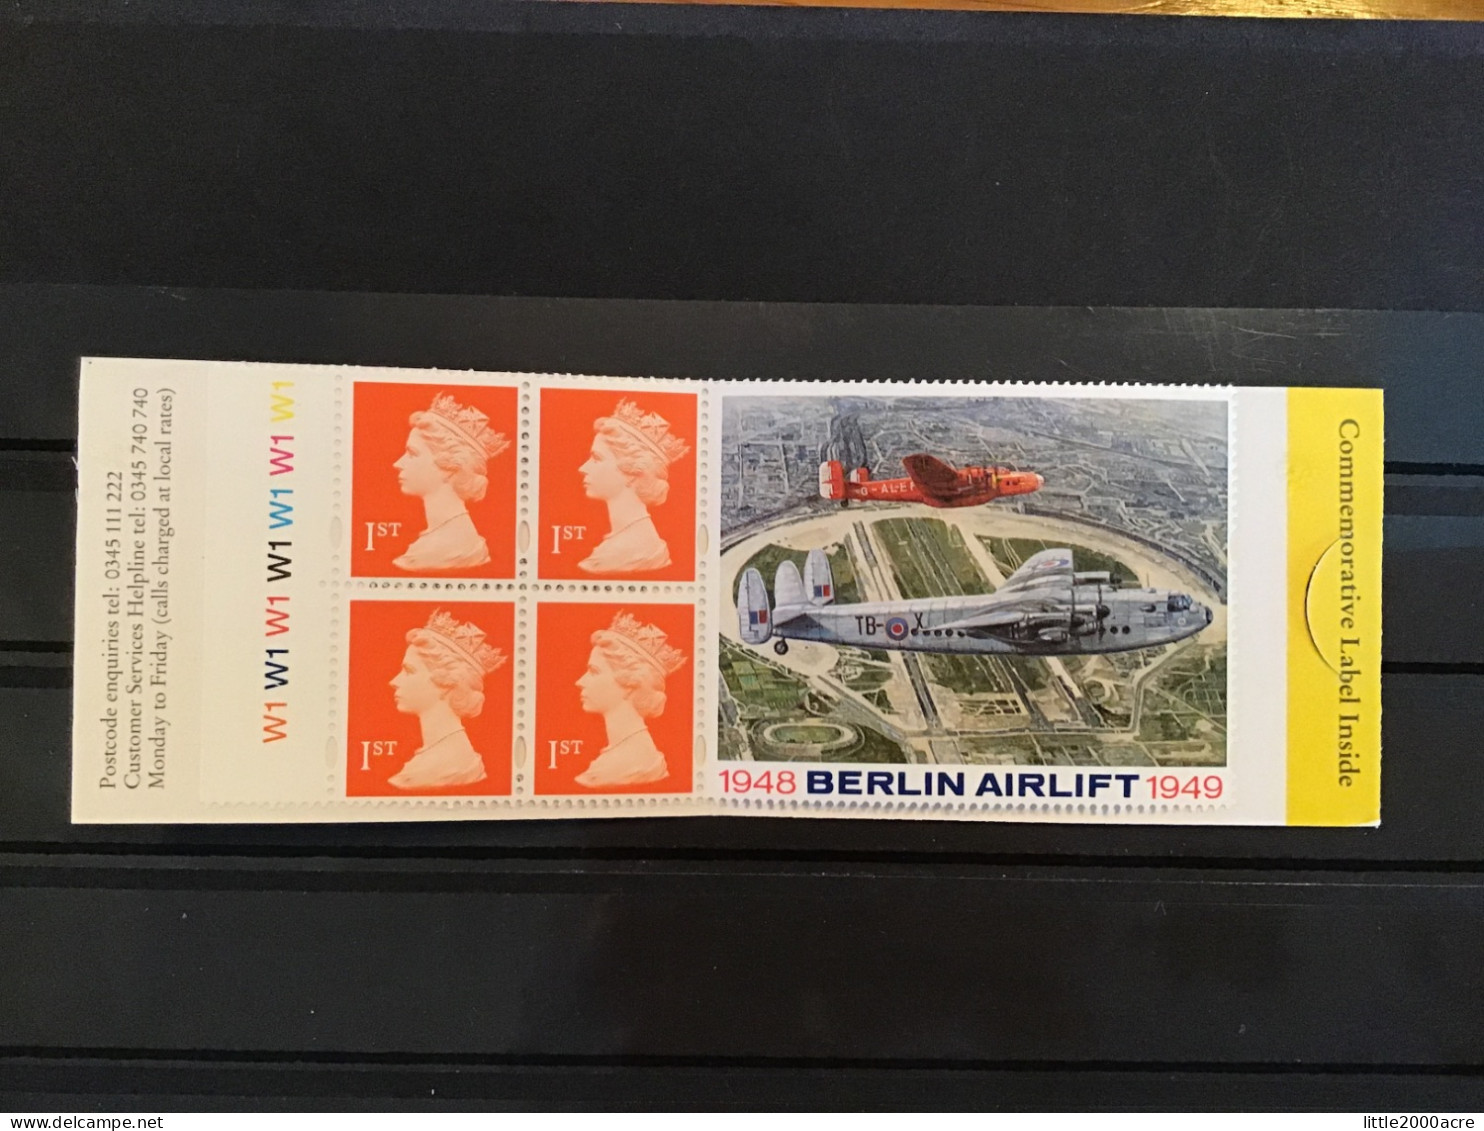 GB 1999 4 1st Class Stamps Barcode Booklet £1.04 Berlin Airlift MNH SG HB17 - Markenheftchen